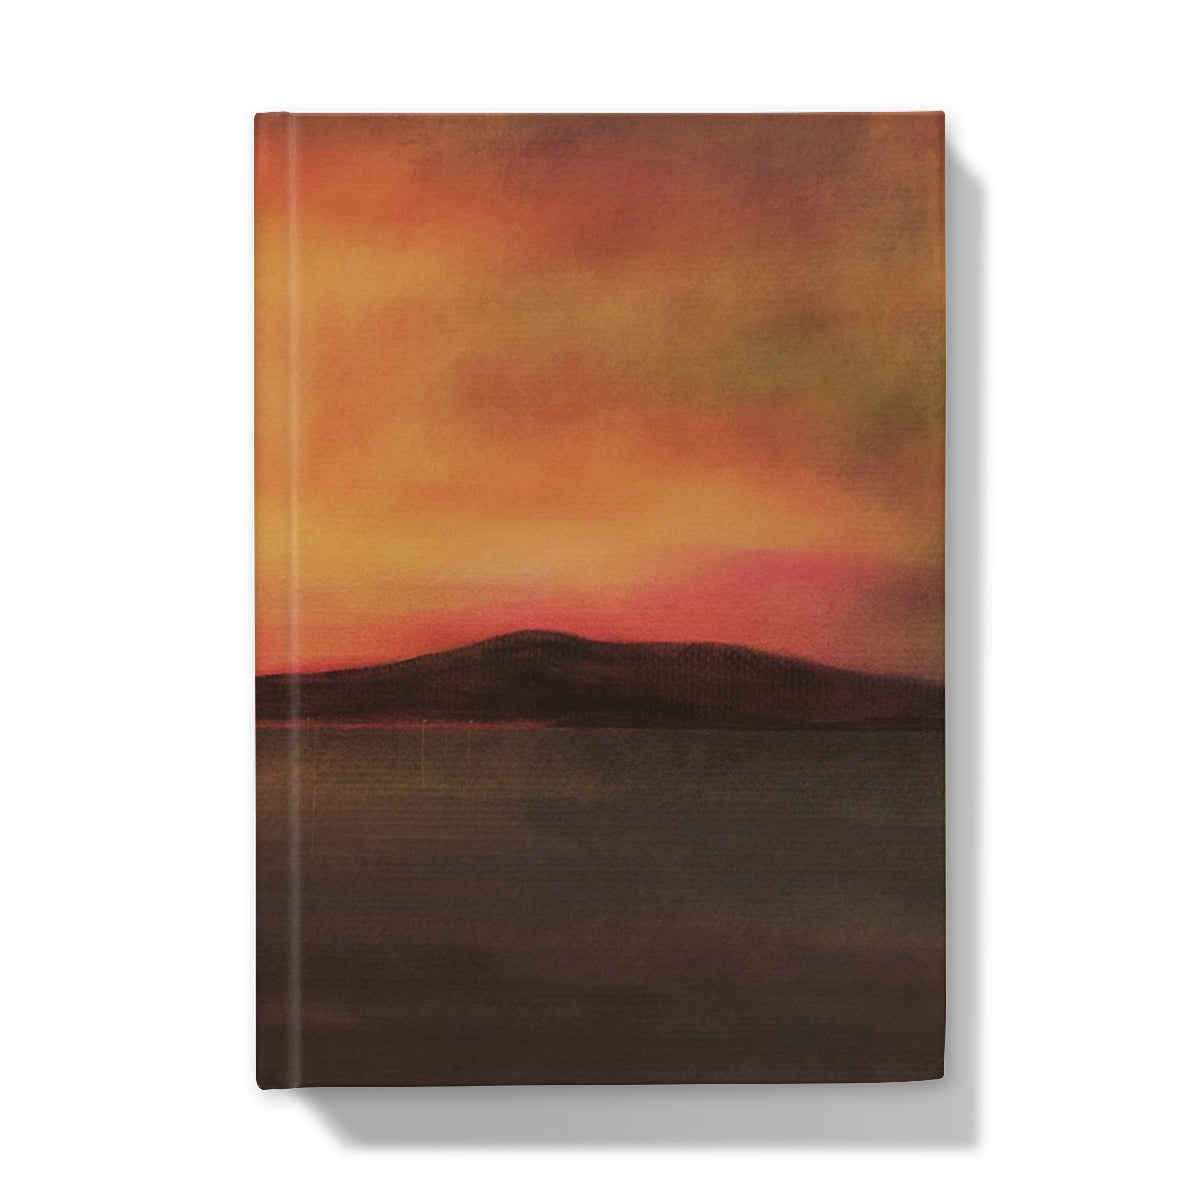 Harris Sunset Art Gifts Hardback Journal-Journals & Notebooks-Hebridean Islands Art Gallery-A5-Lined-Paintings, Prints, Homeware, Art Gifts From Scotland By Scottish Artist Kevin Hunter